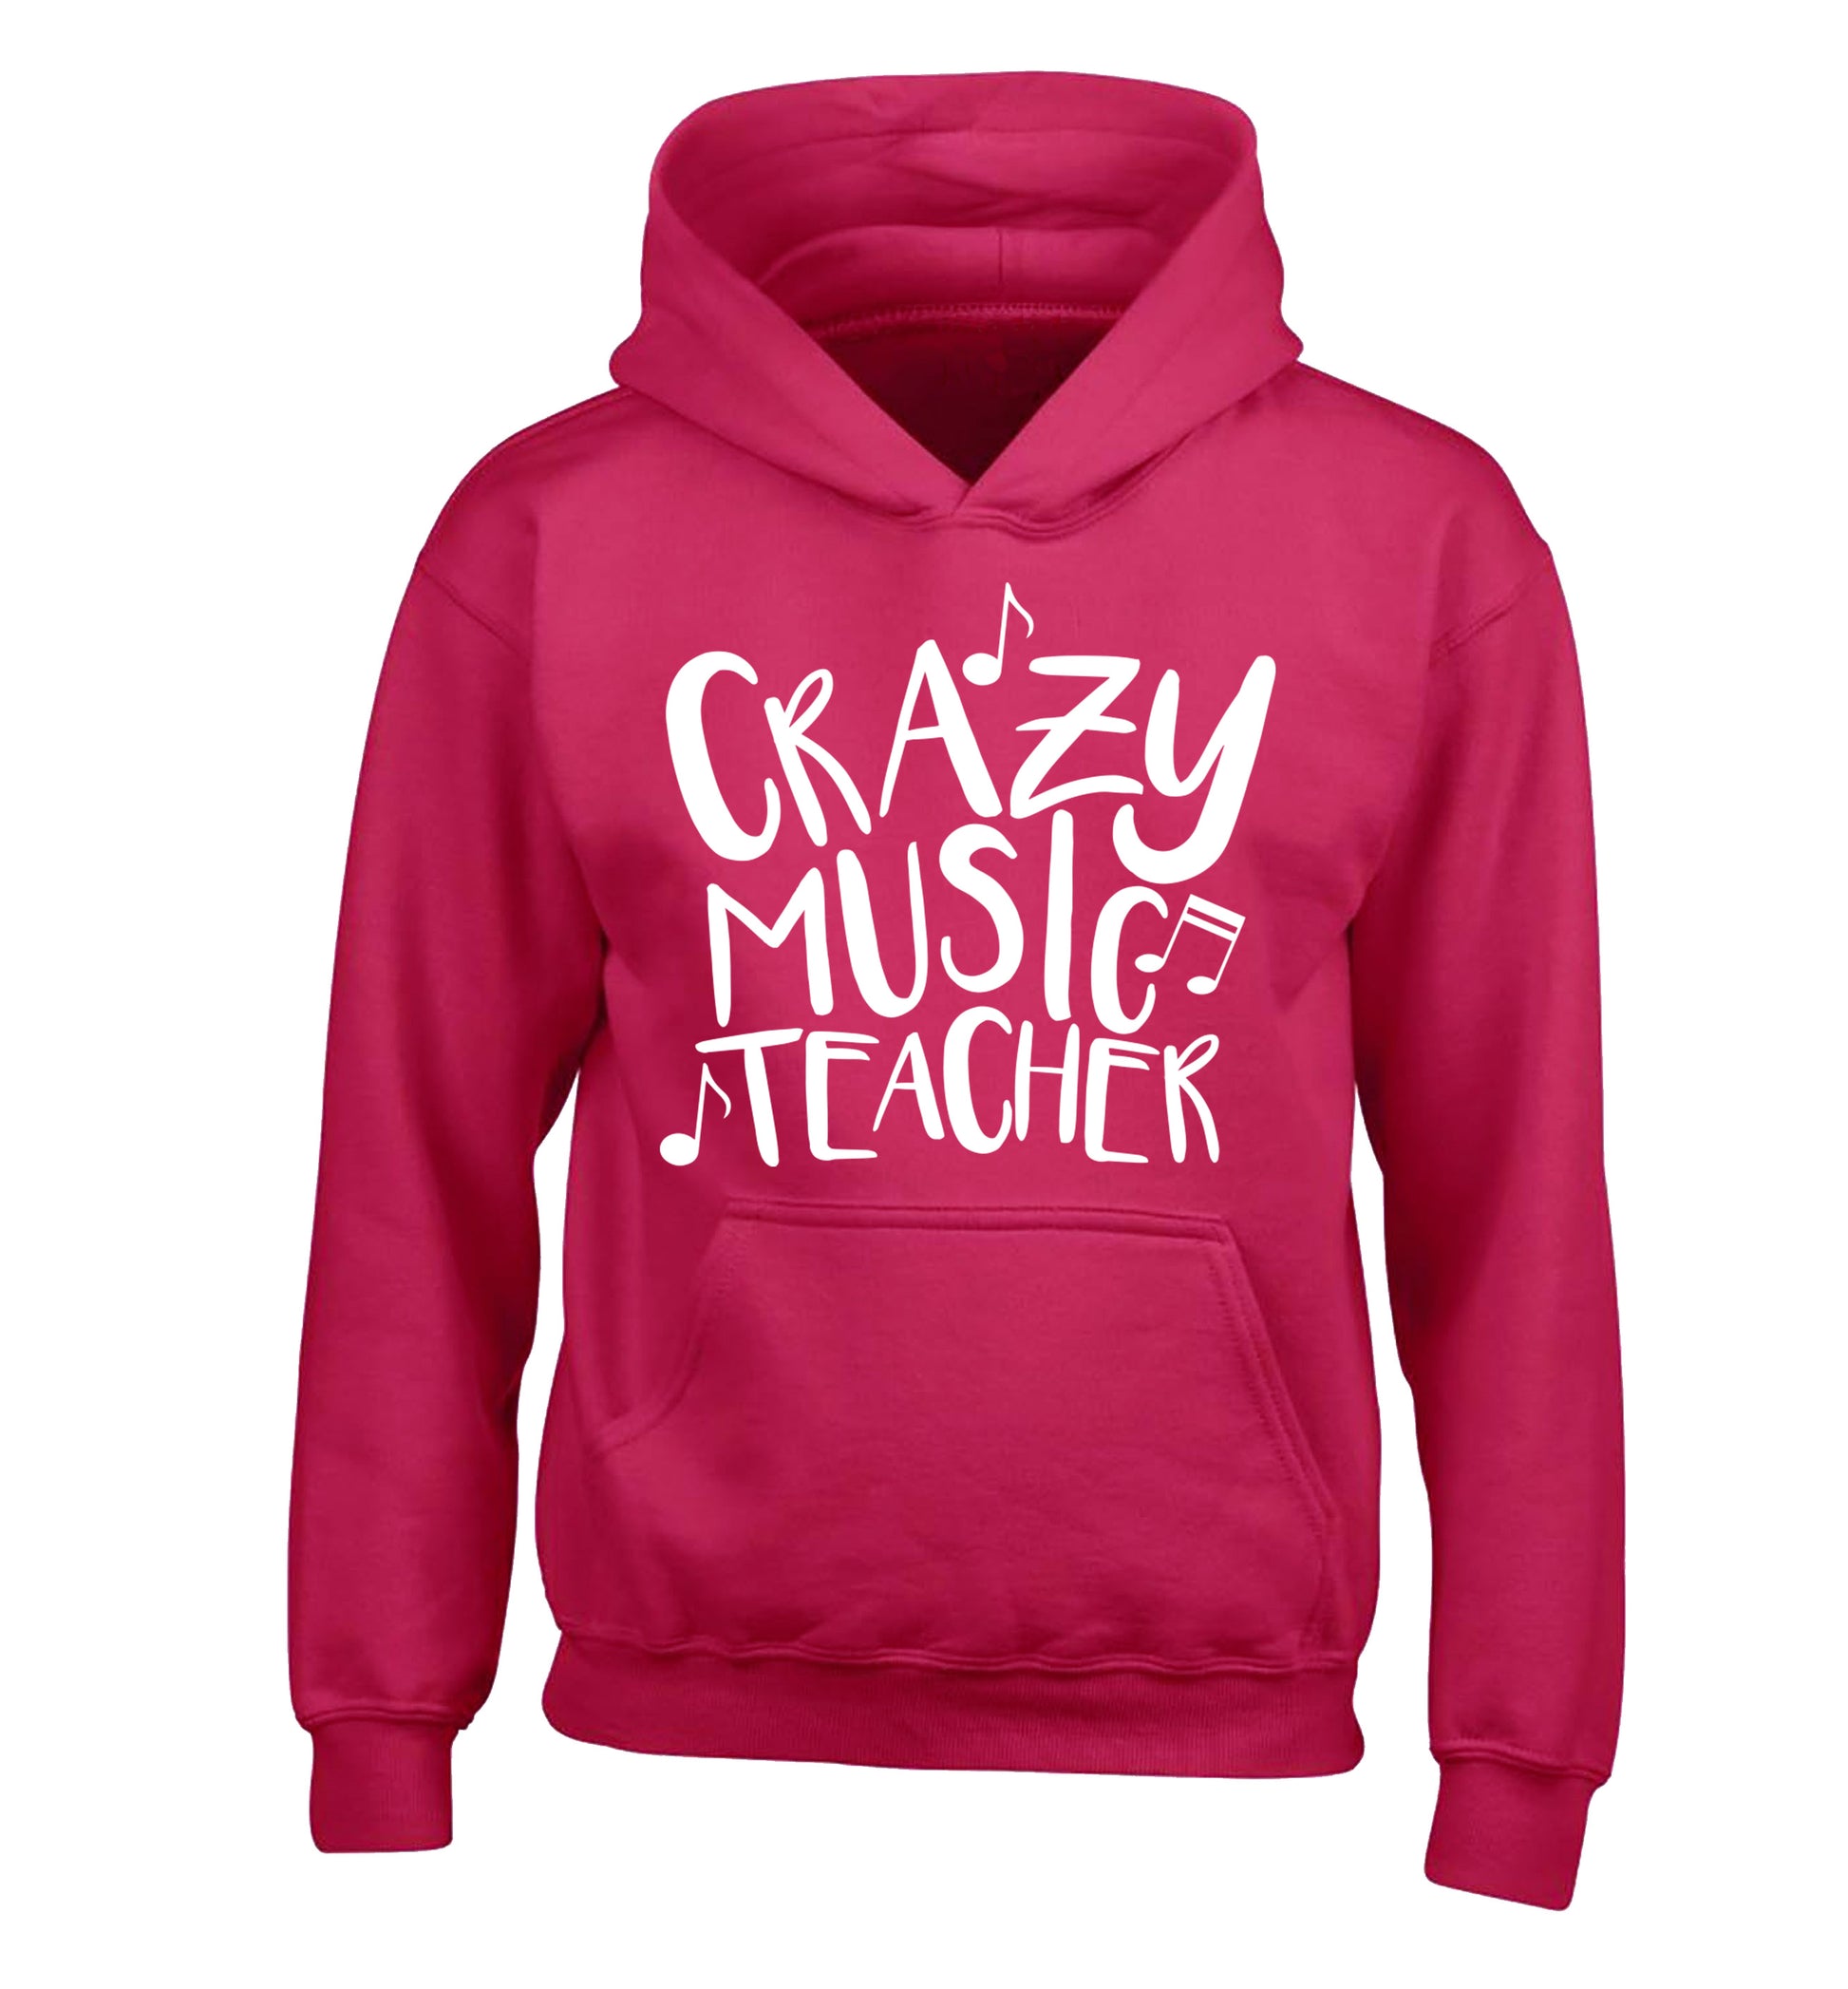 Crazy music teacher children's pink hoodie 12-13 Years